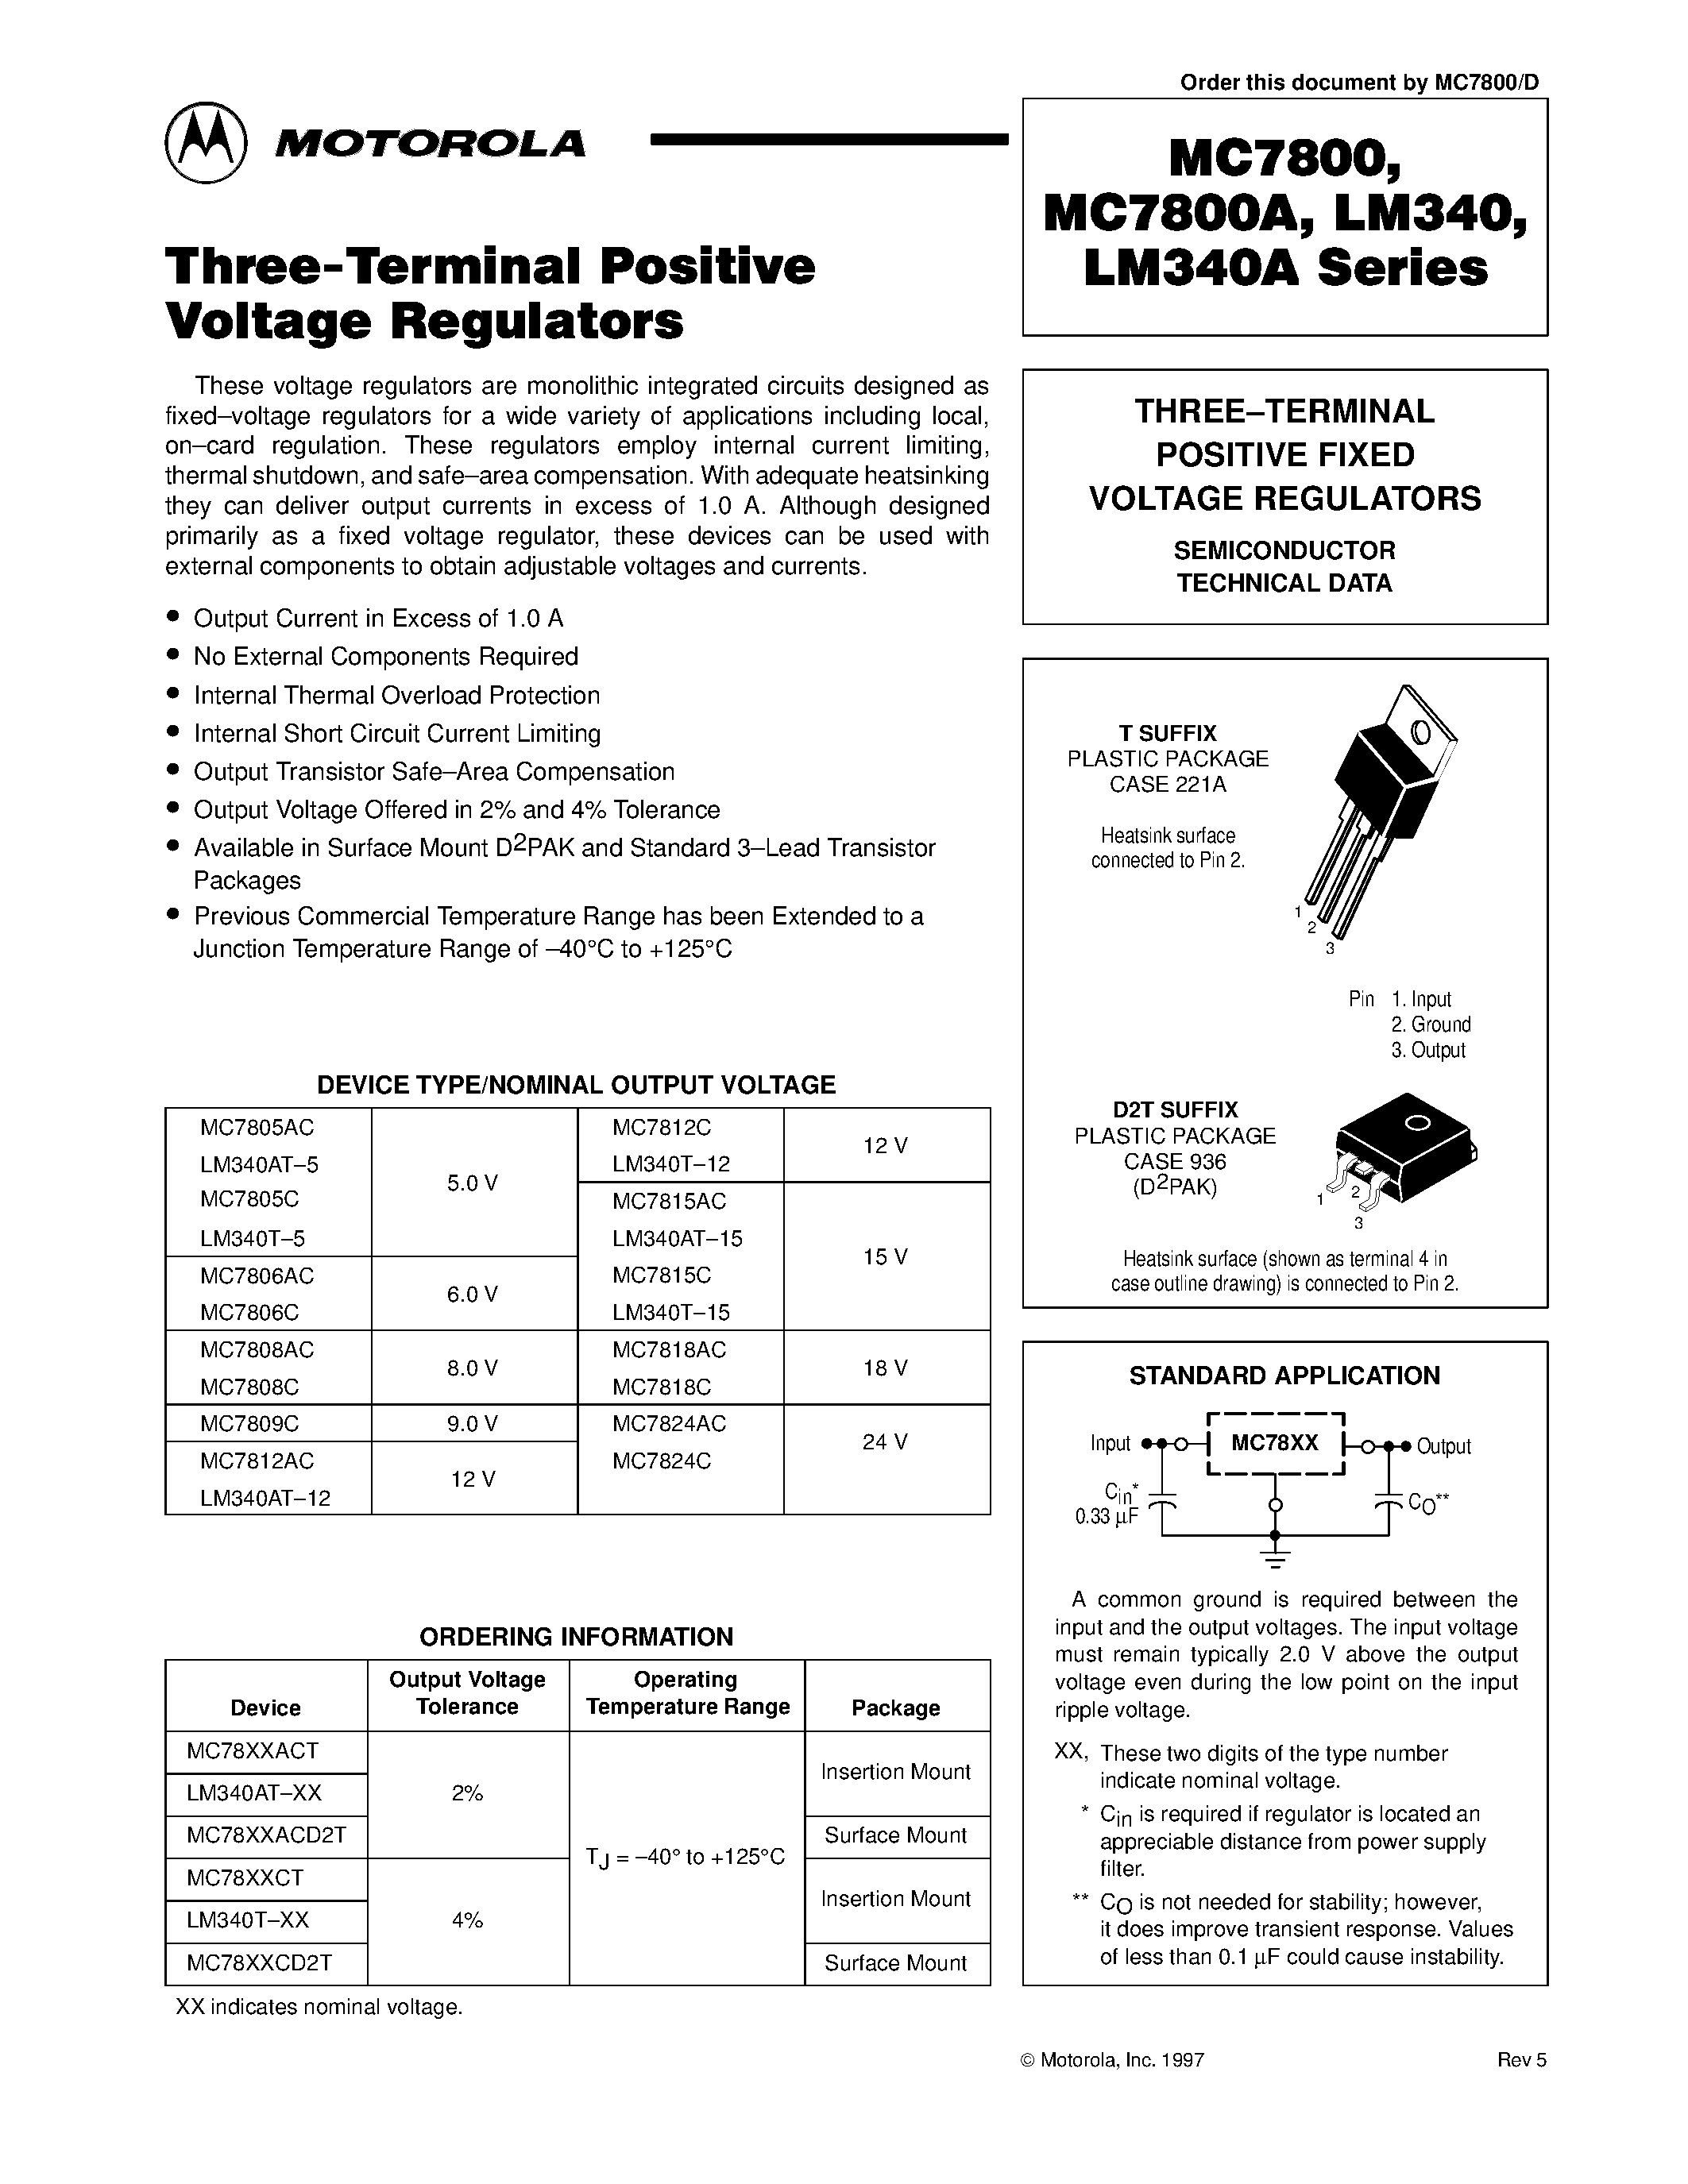 Datasheet MC7808CD2T - THREE TERMINAL POSITIVE FIXED VOLTAGE REGULATORS page 1